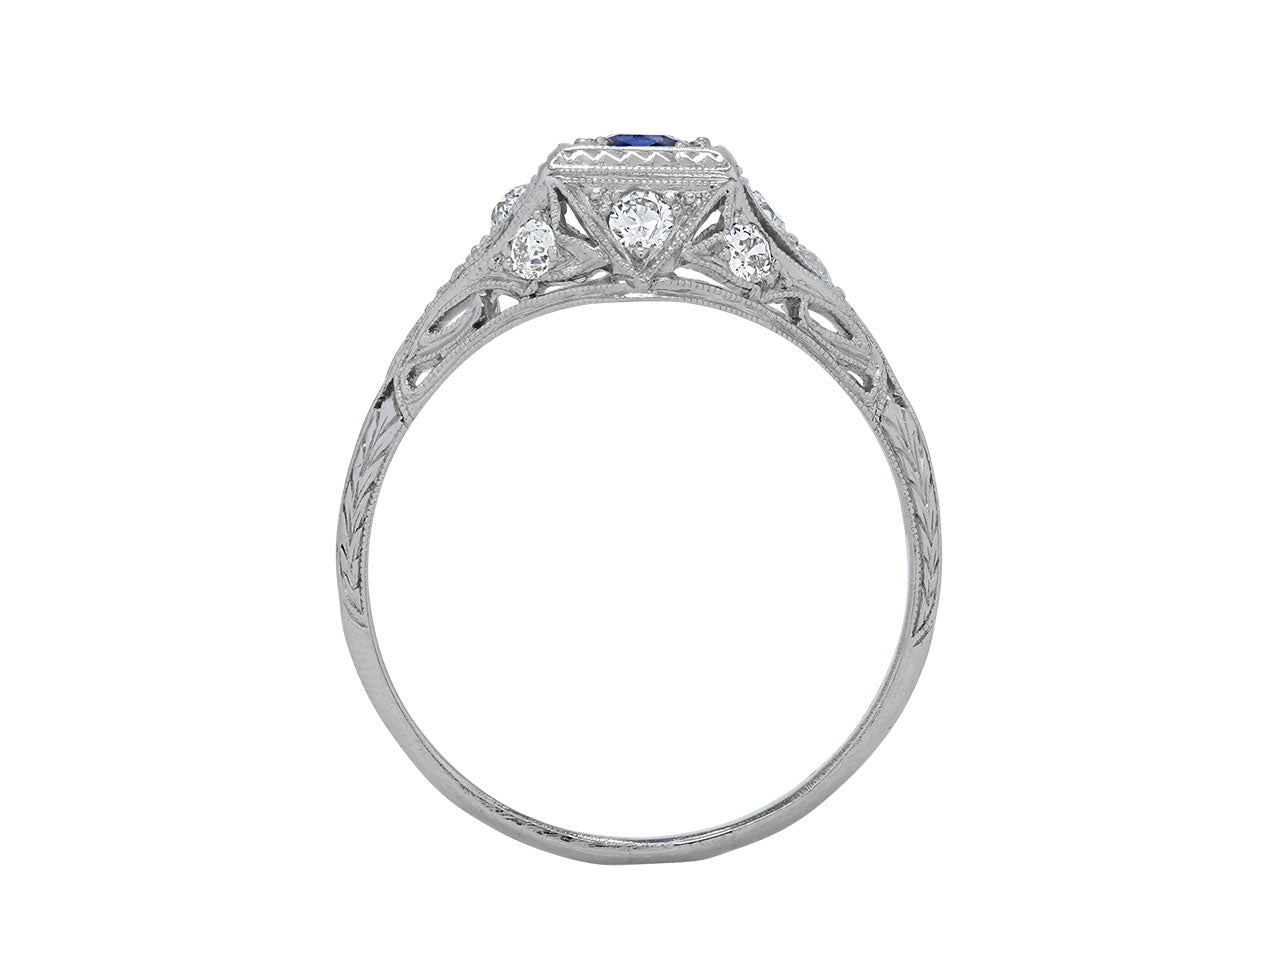 Art Deco Sapphire and Diamond Ring in Platinum